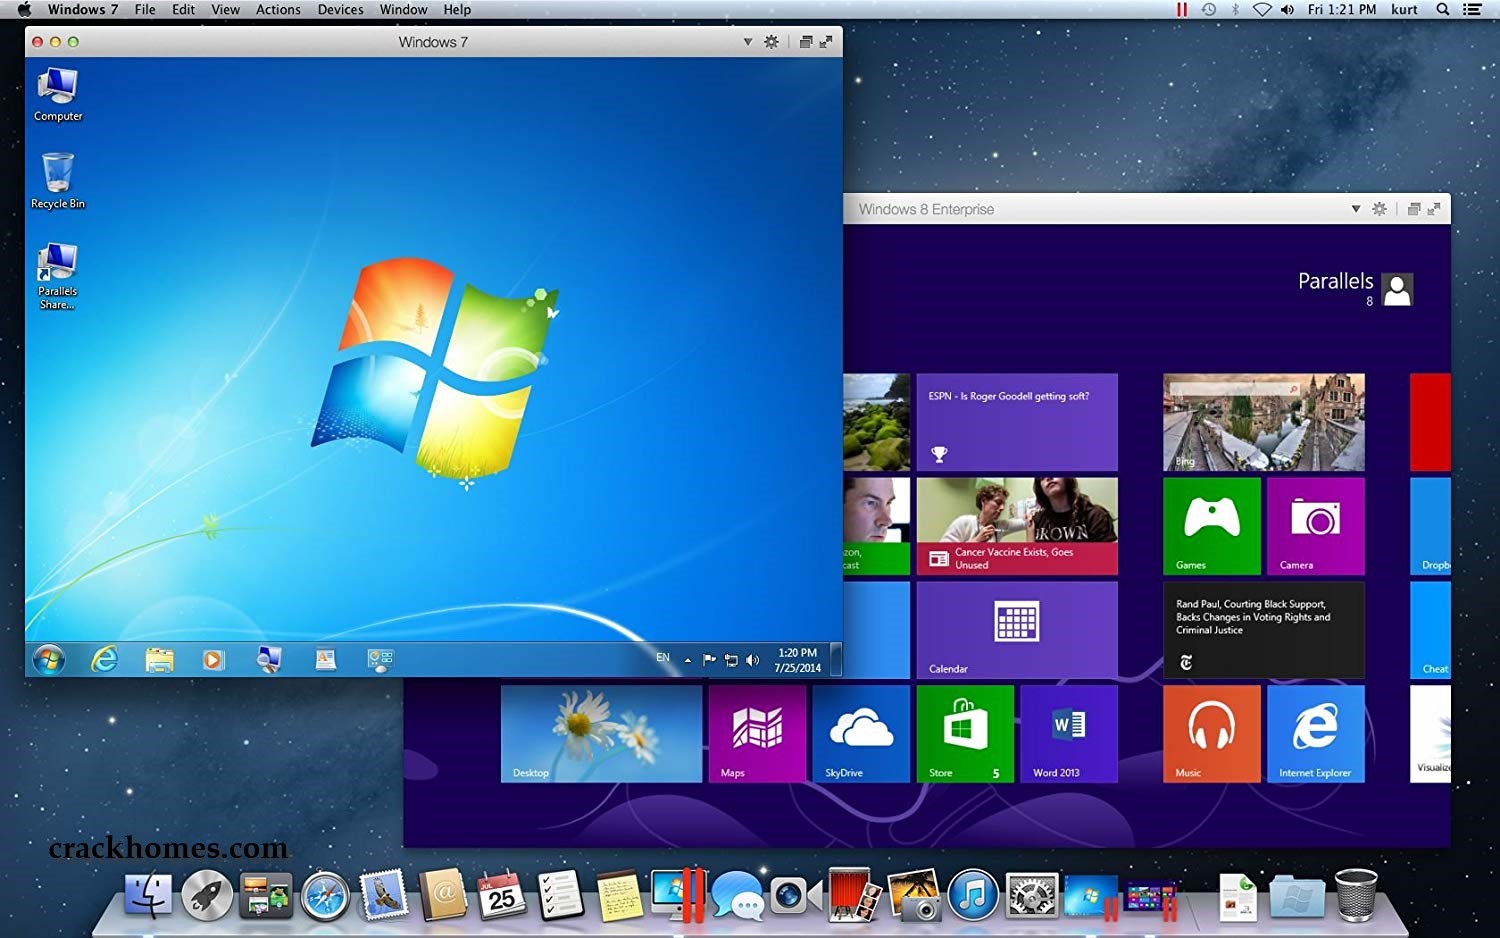 parallels desktop for mac key